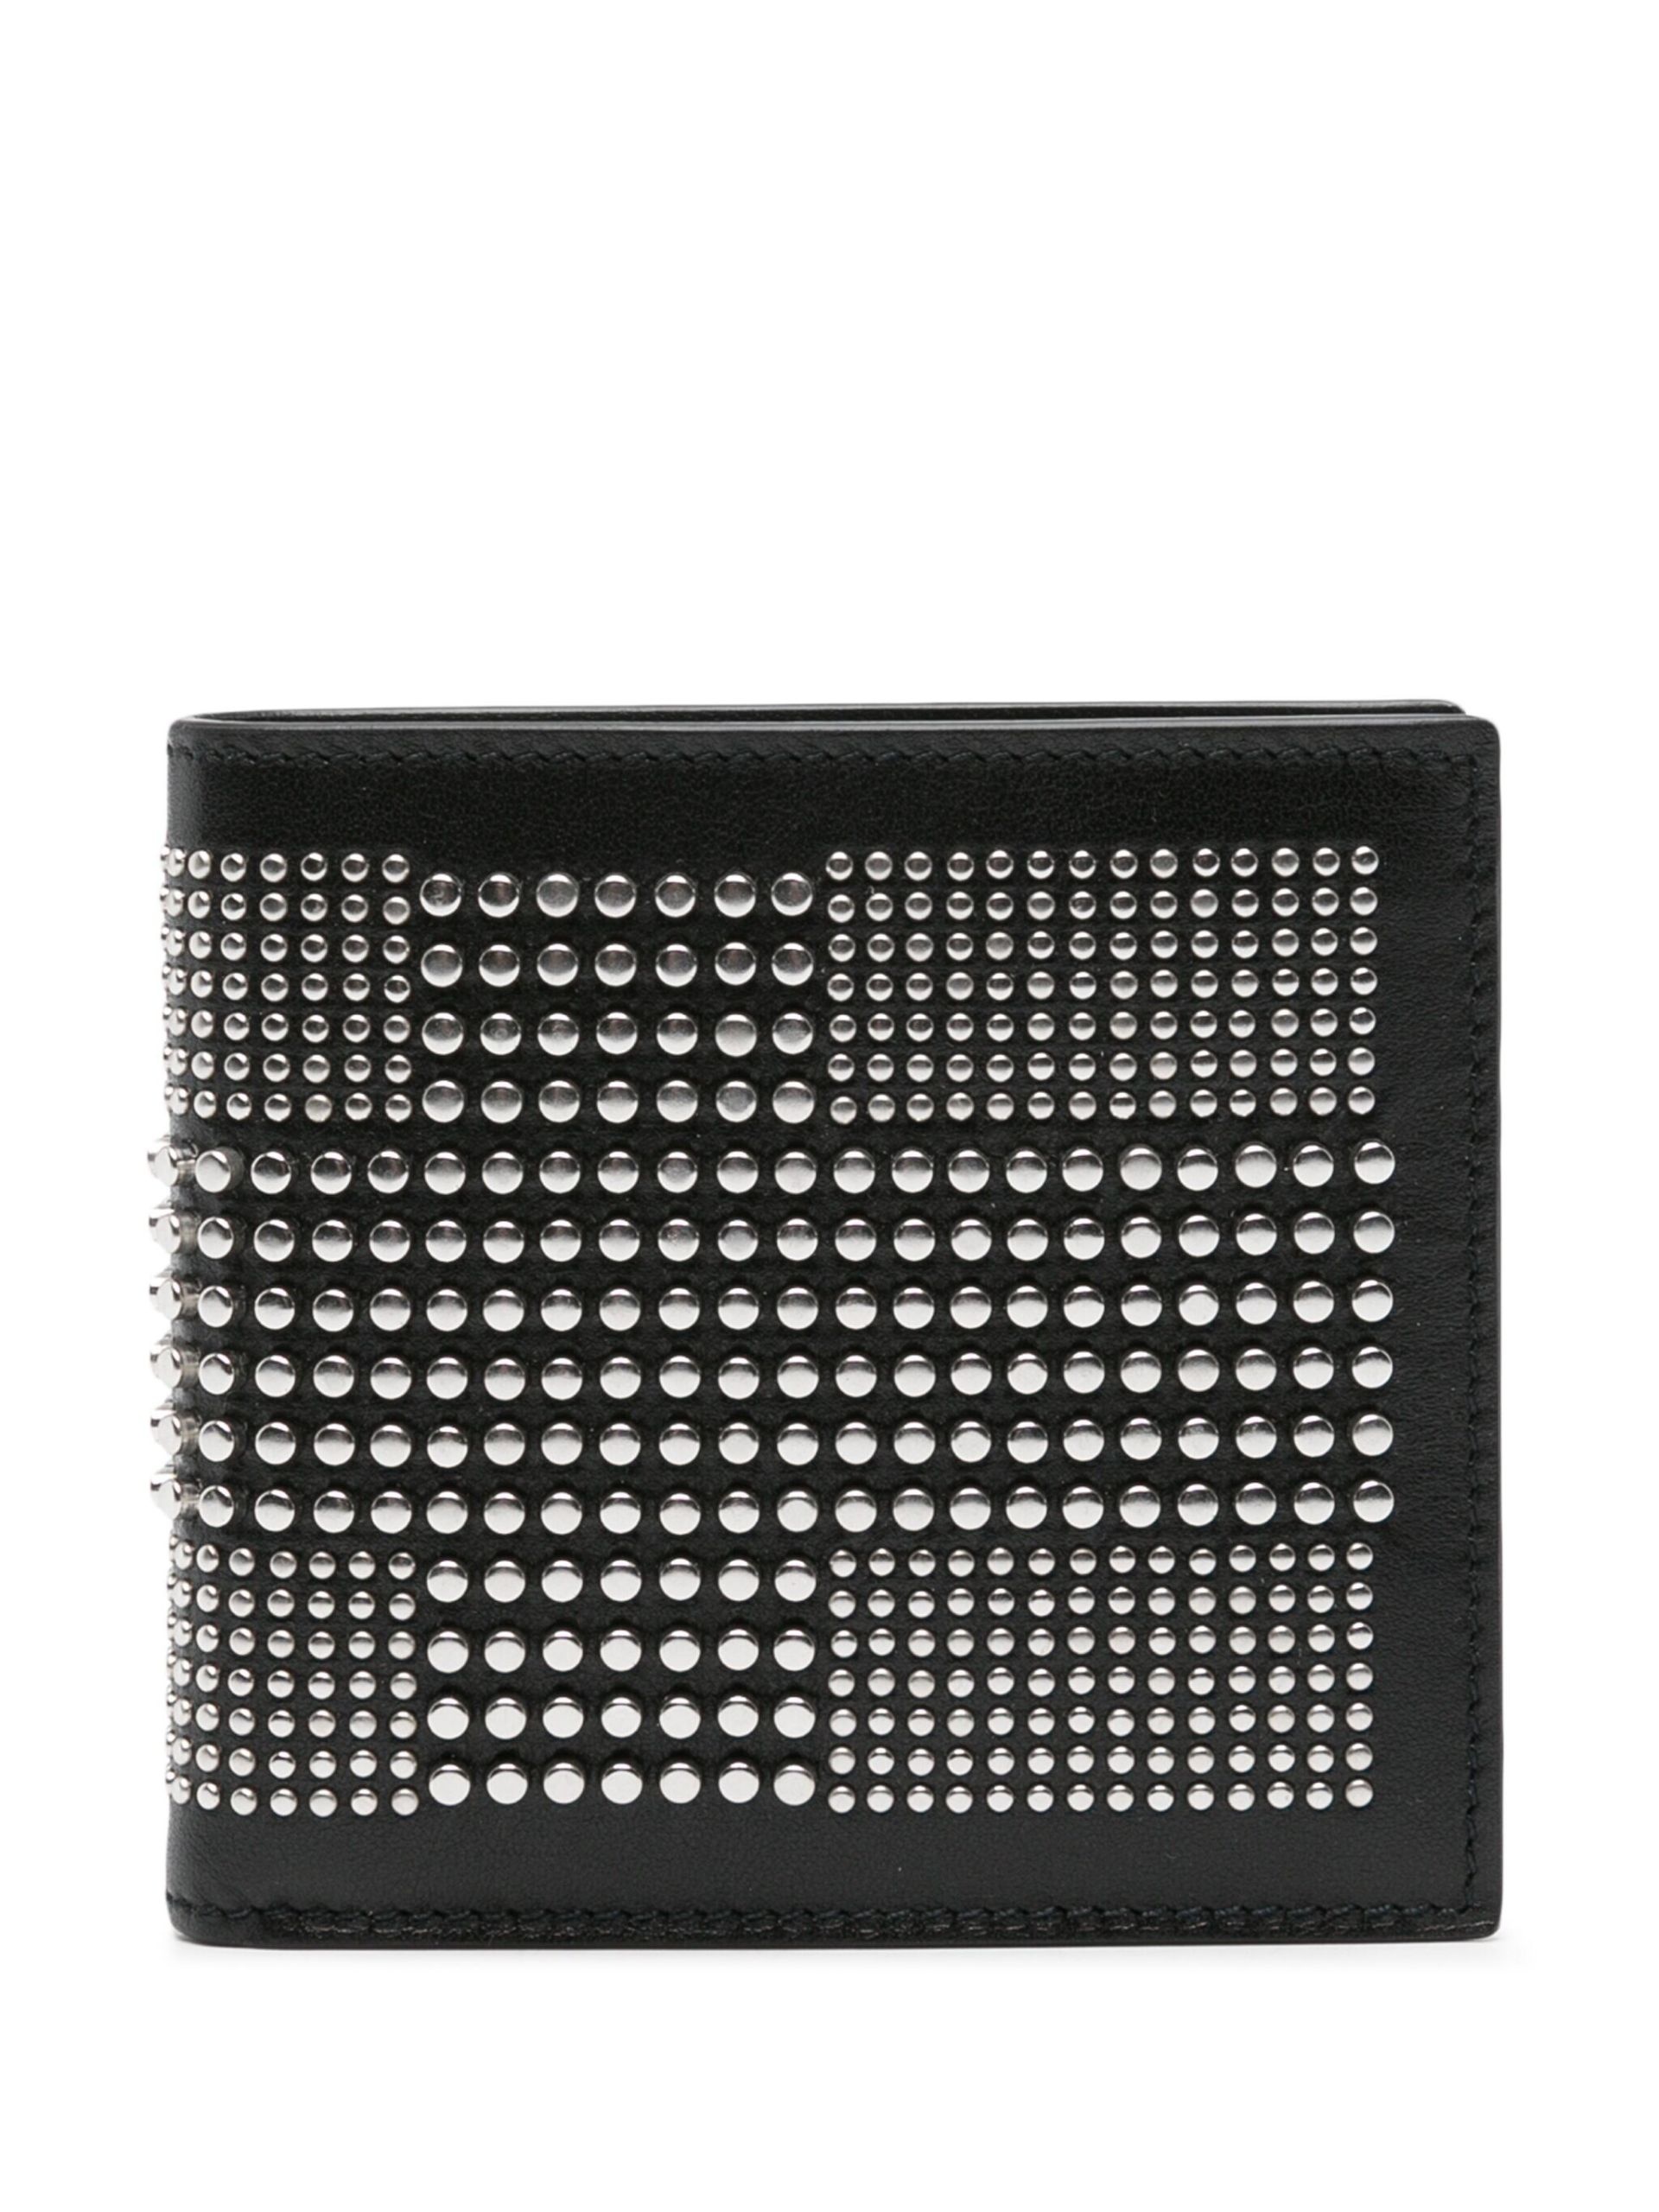 black studded bi-fold leather wallet - 1